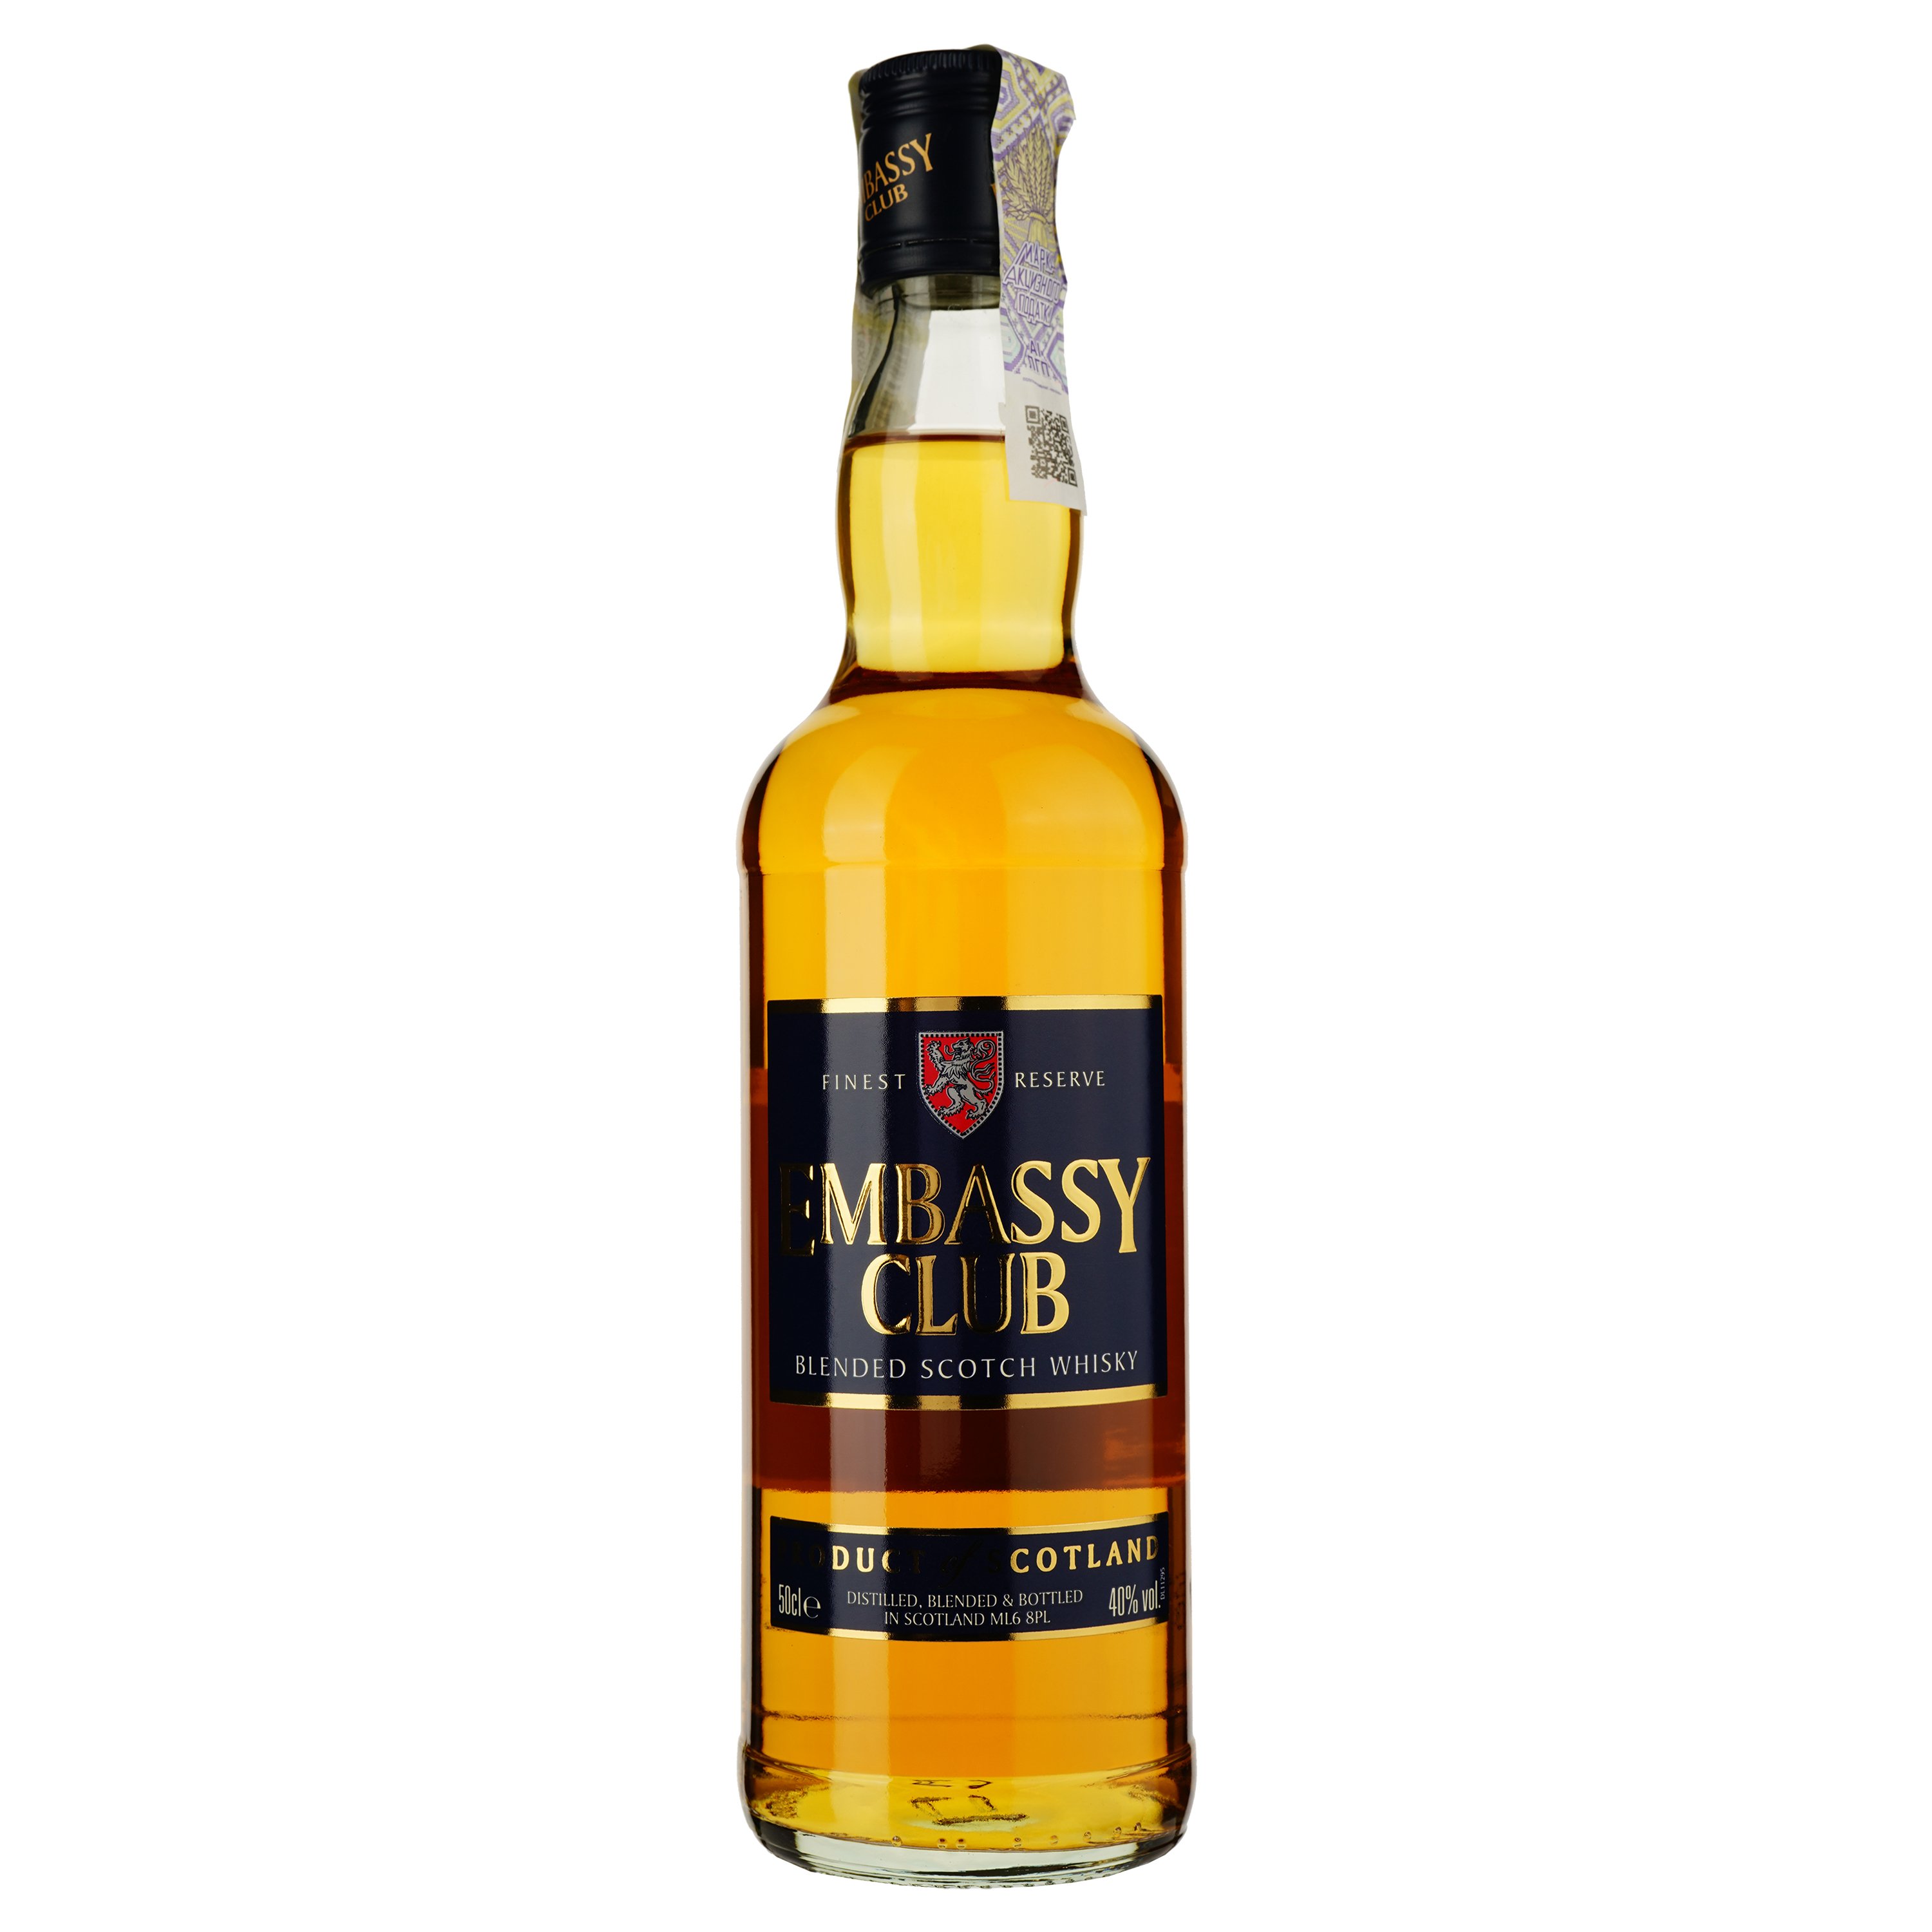 Віскі Embassy Club 3 yo Blended Scotch Whisky, 40%, 0,5 л - фото 1